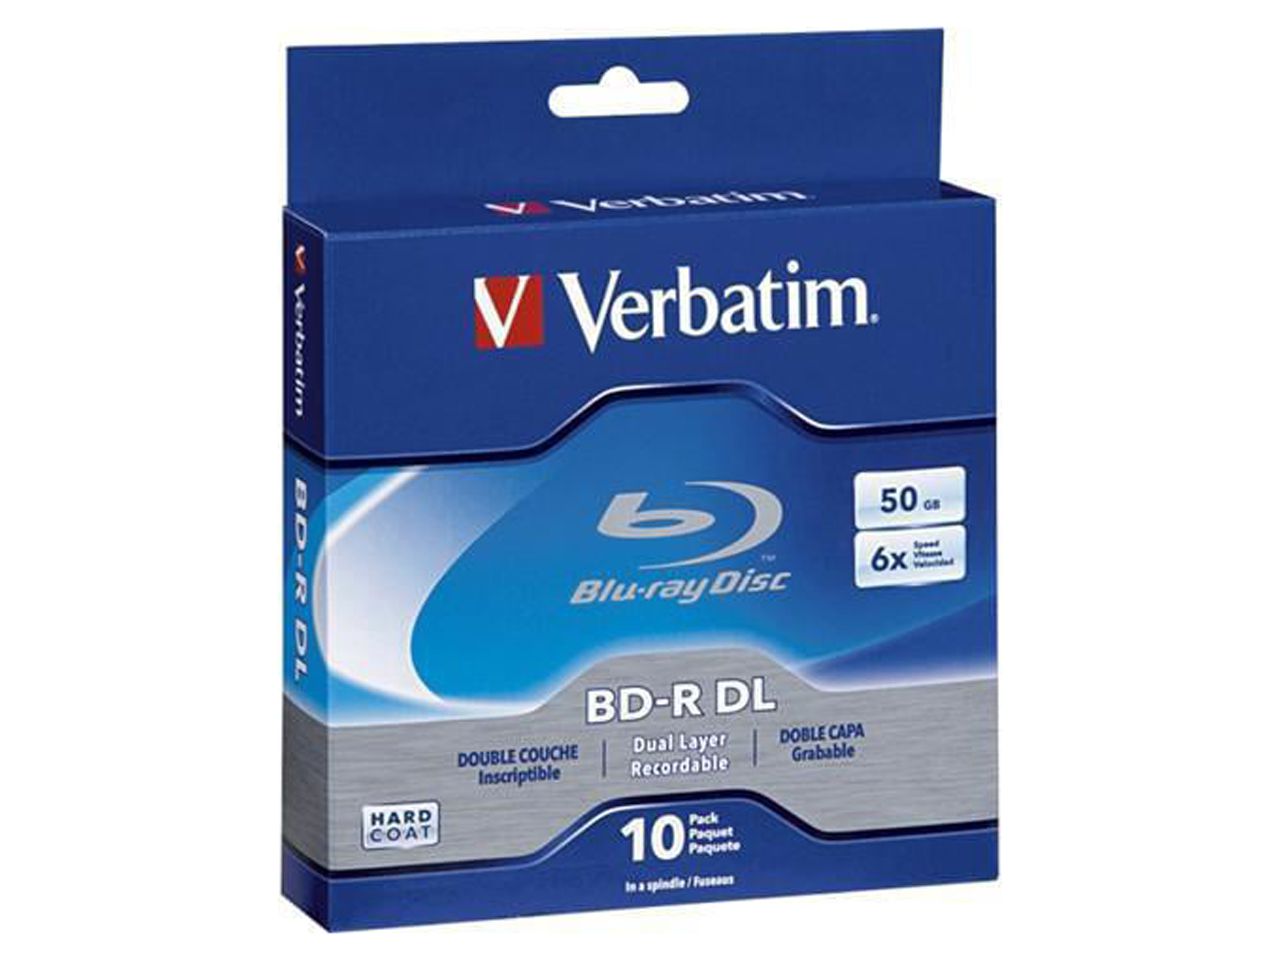 Verbatim 50GB 6X BD-R DL 10 Packs Spindle Disc Model 97335 - image 1 of 3